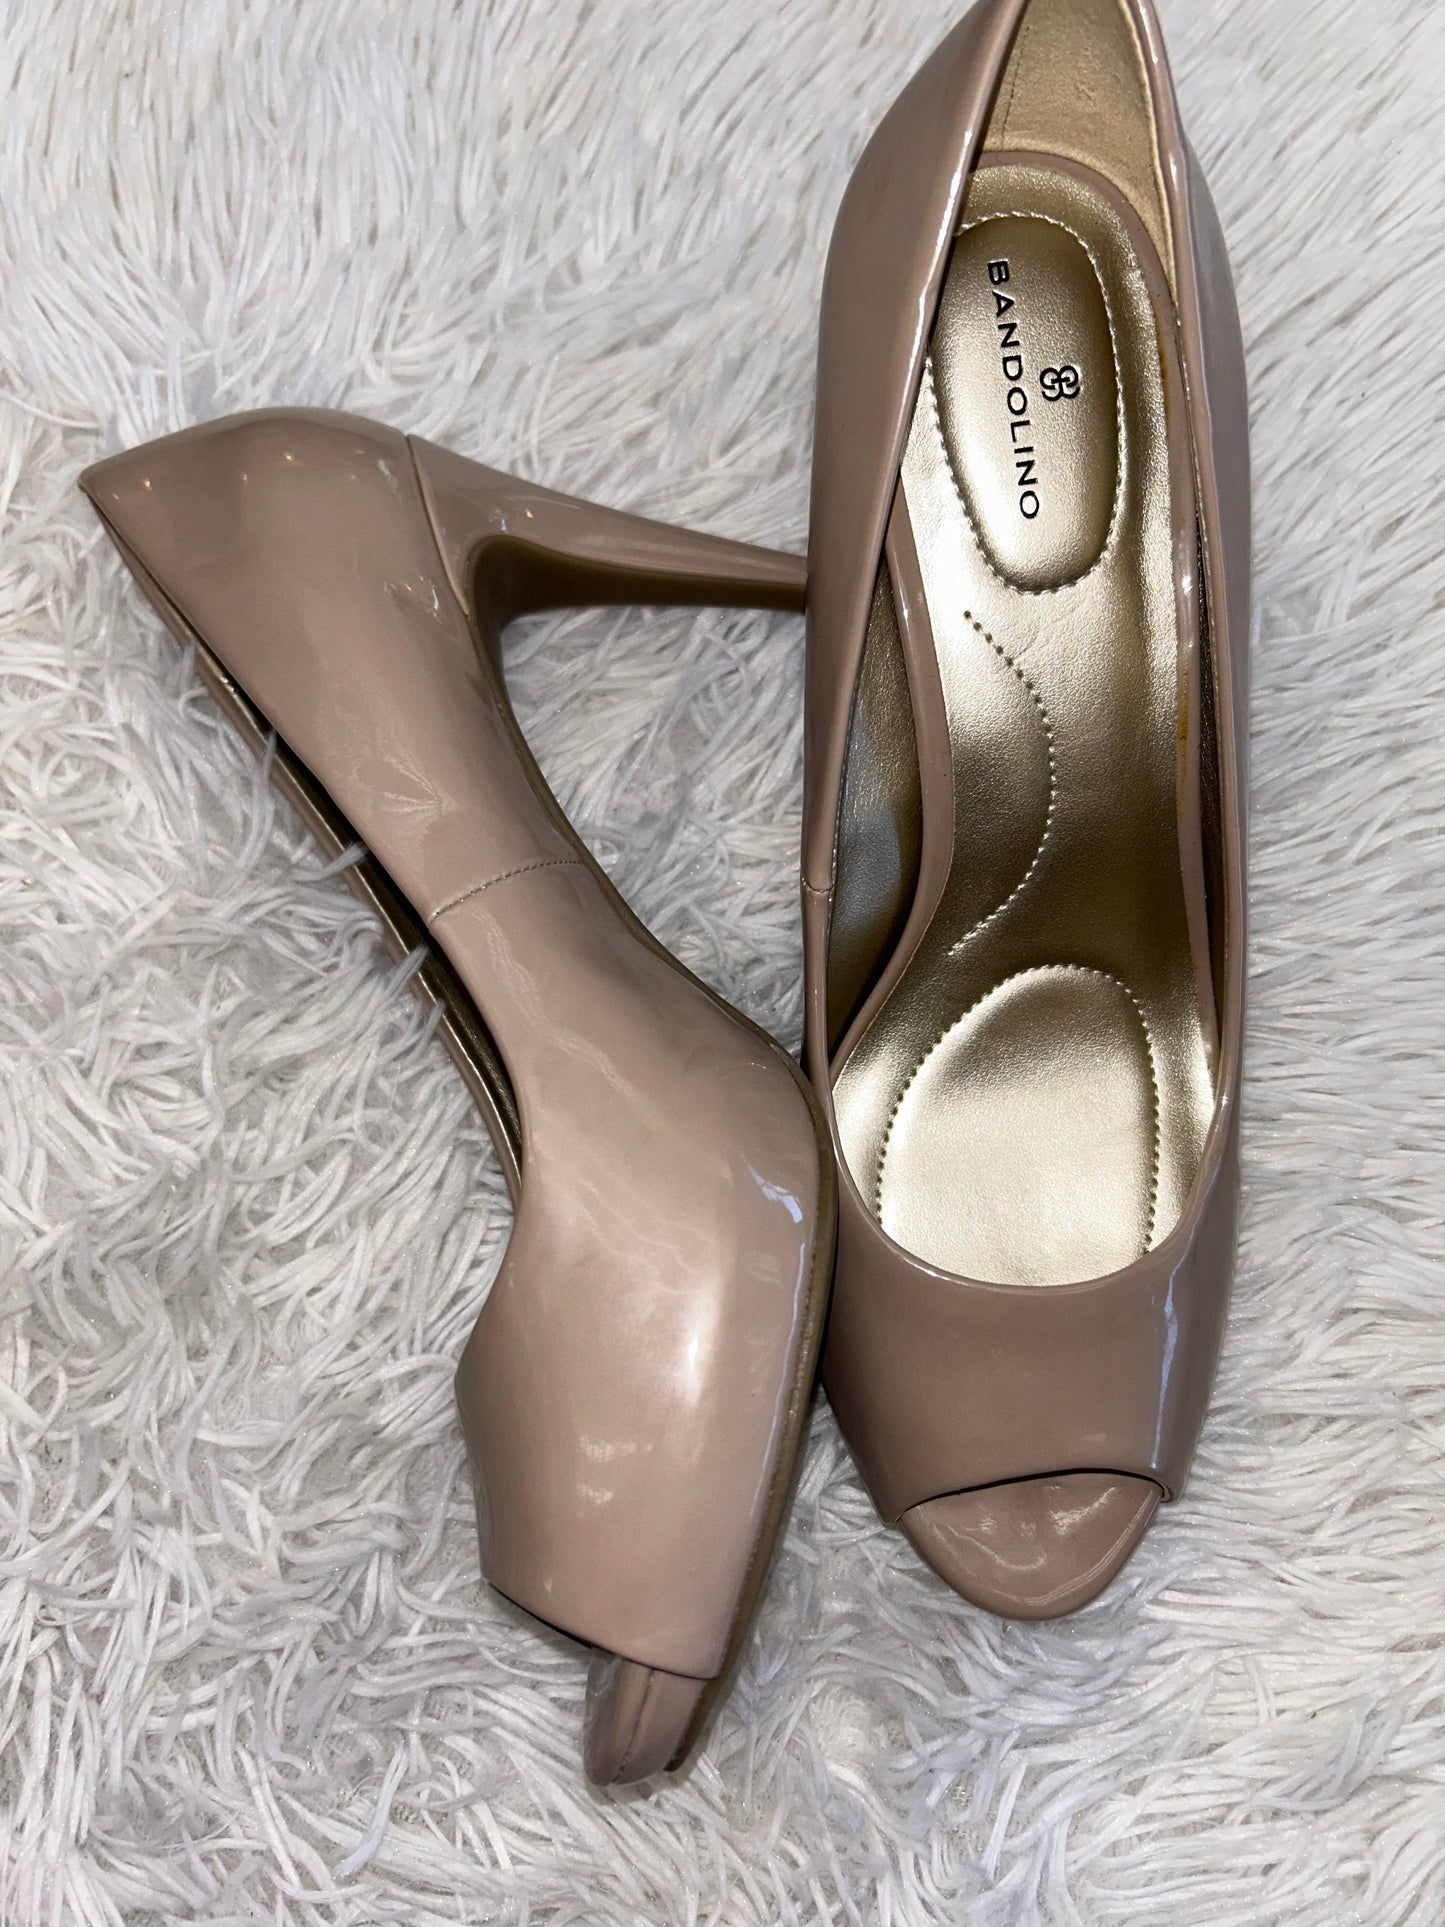 Shoes Heels Stiletto By Bandolino  Size: 8